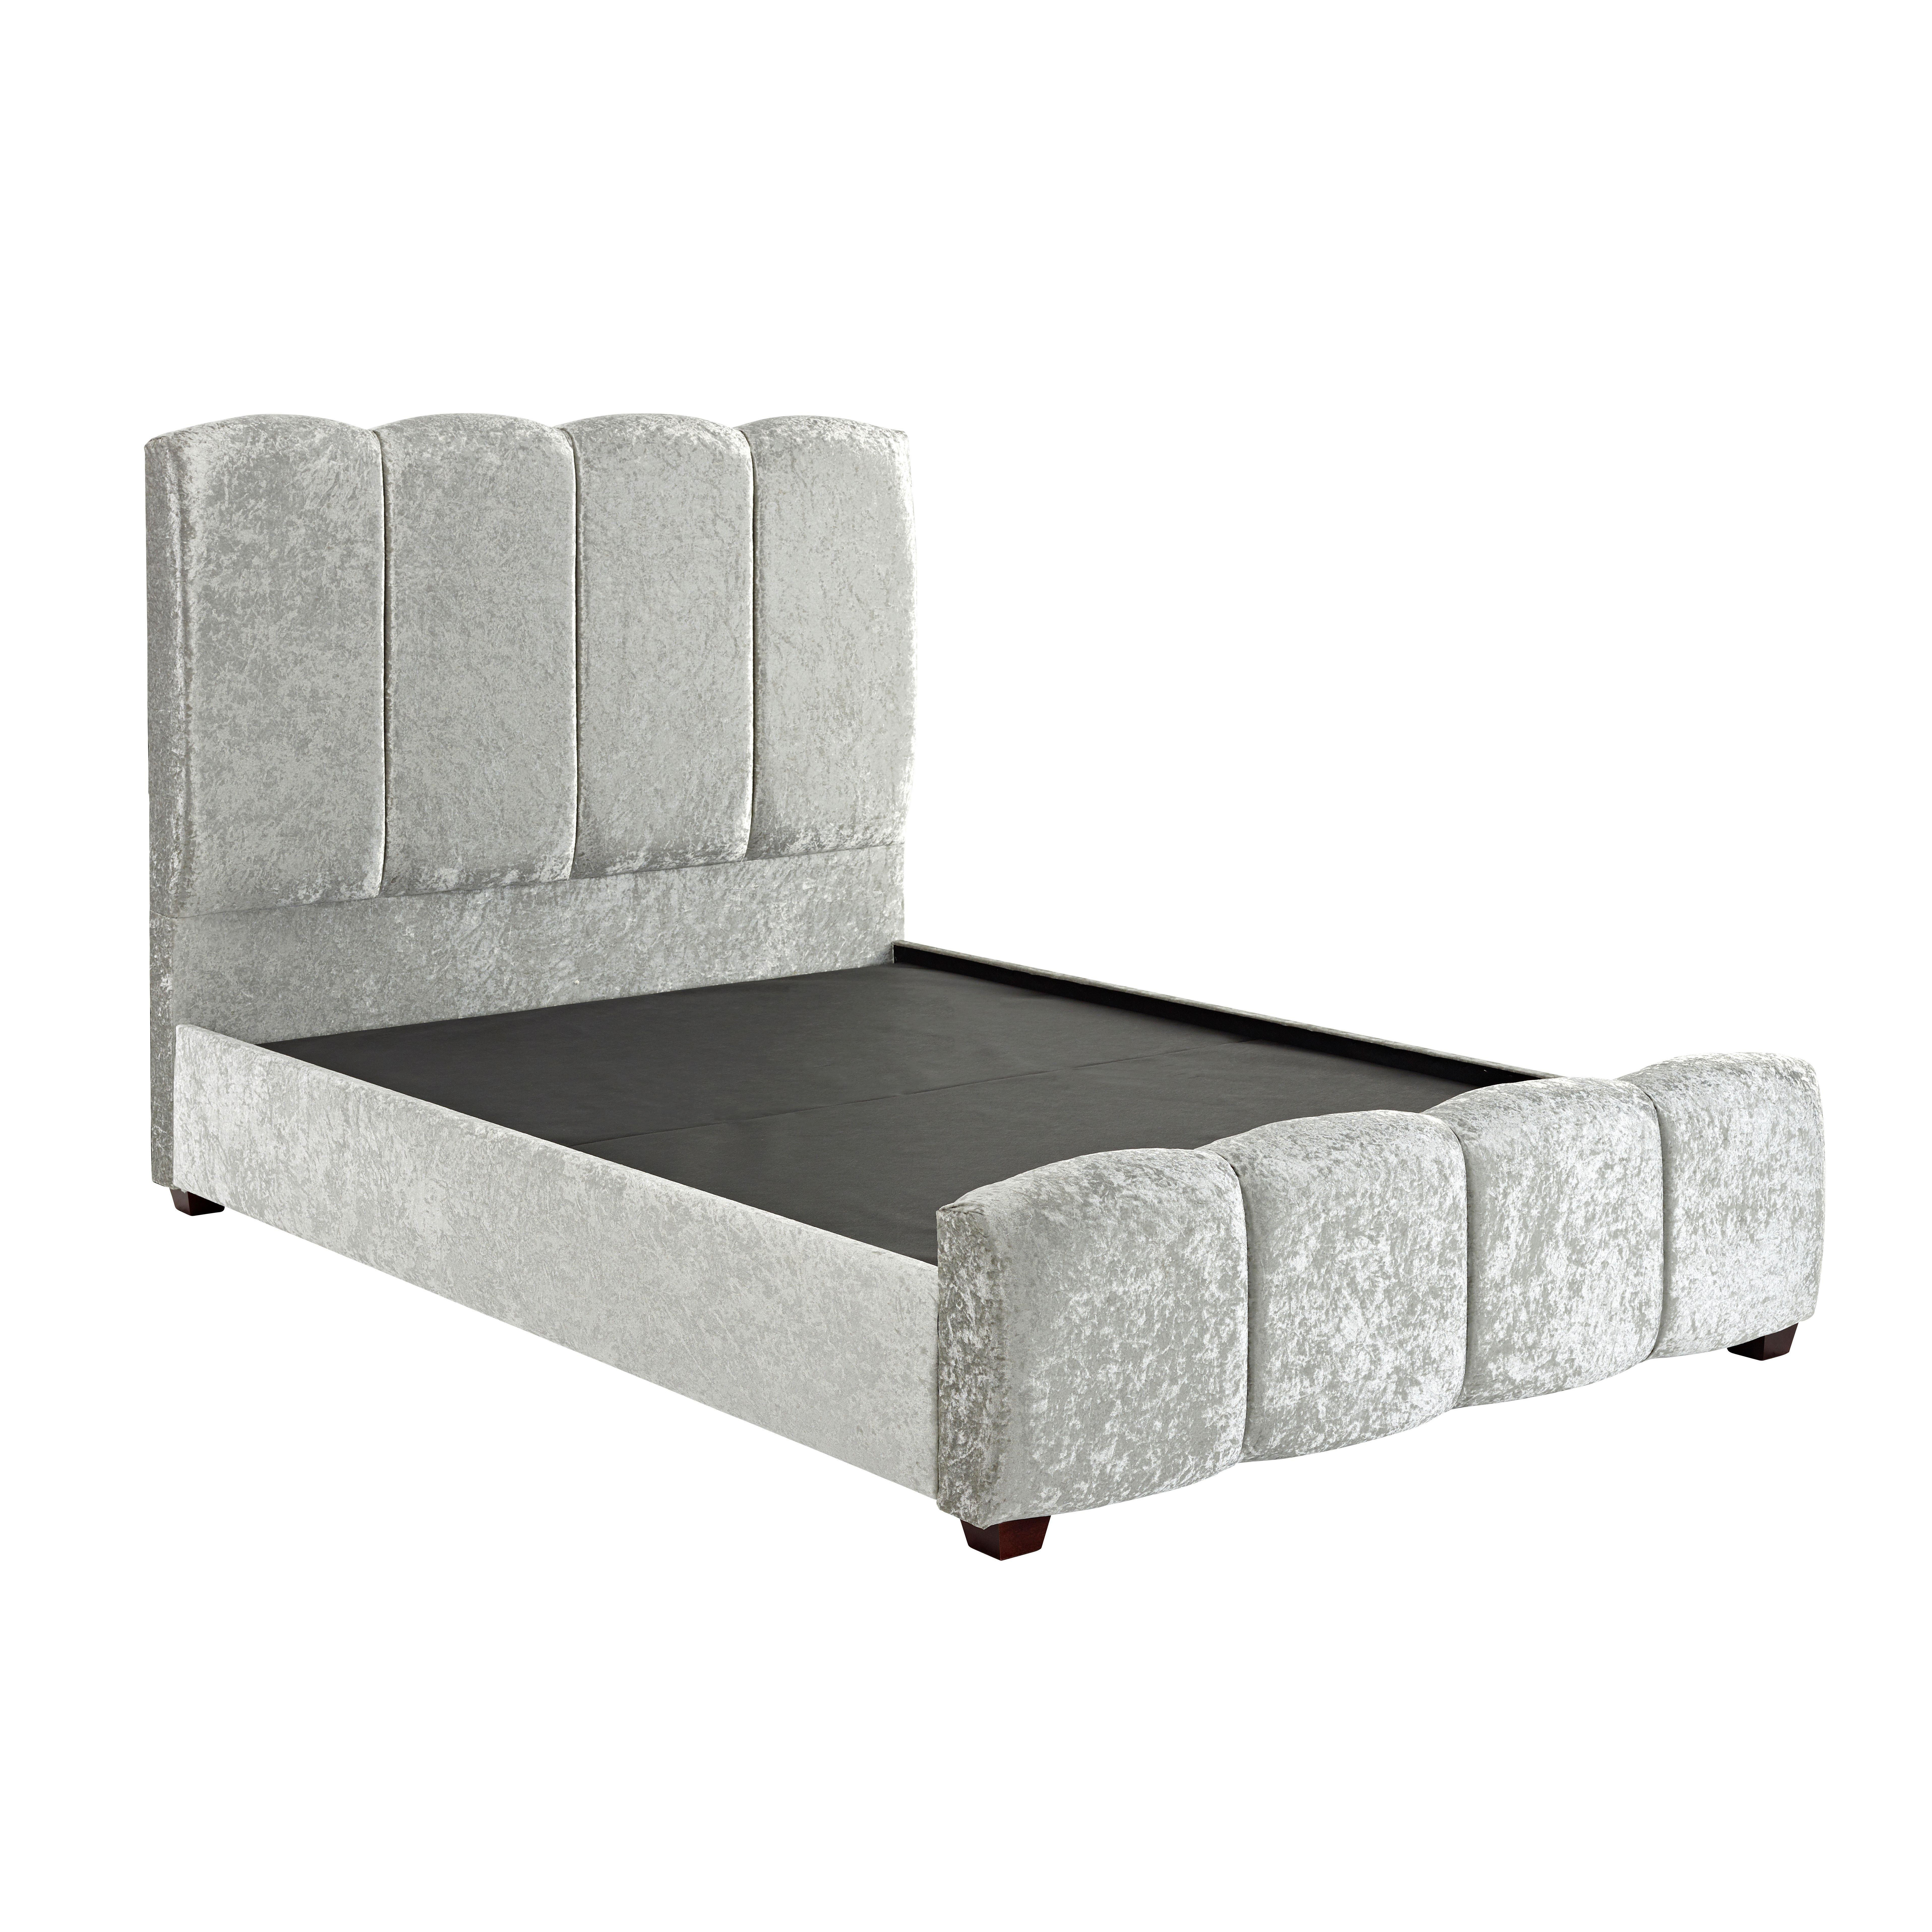 Claire Panel Luxury Crushed Velvet Upholstered Bed Frame Bling Silver - image 1